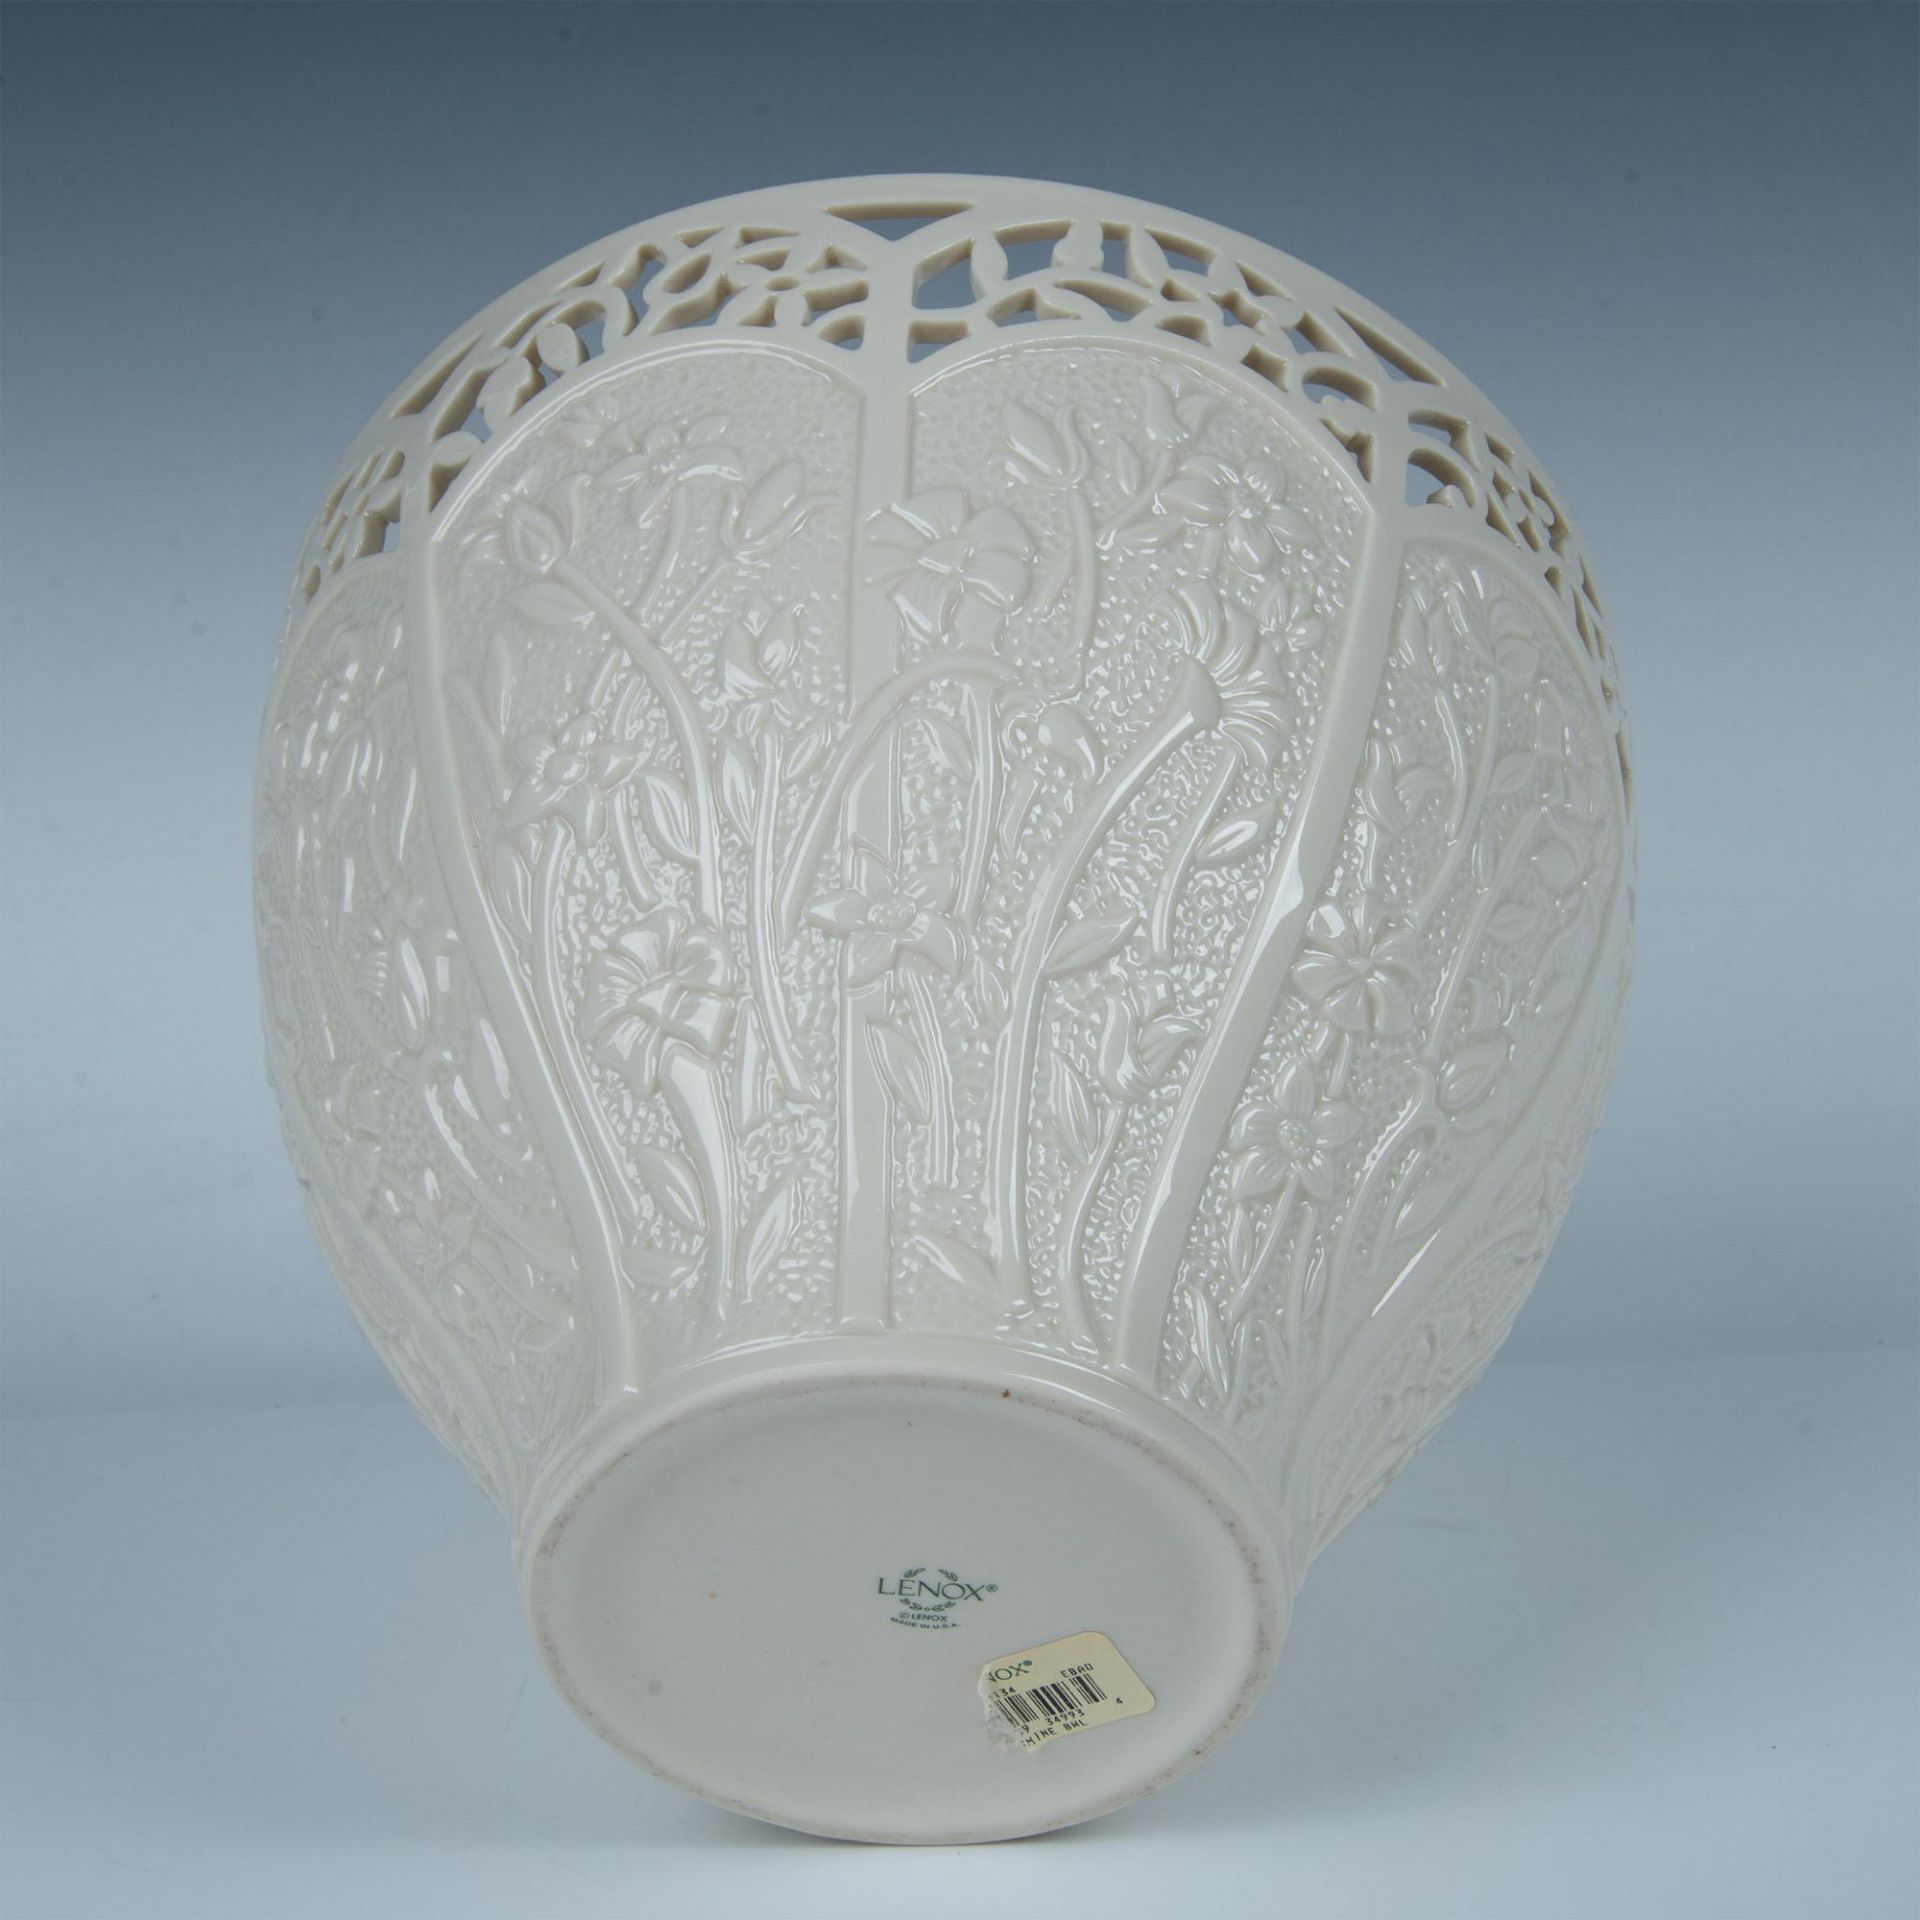 Lenox Porcelain Reticulated Bowl, Jasmine - Image 5 of 6